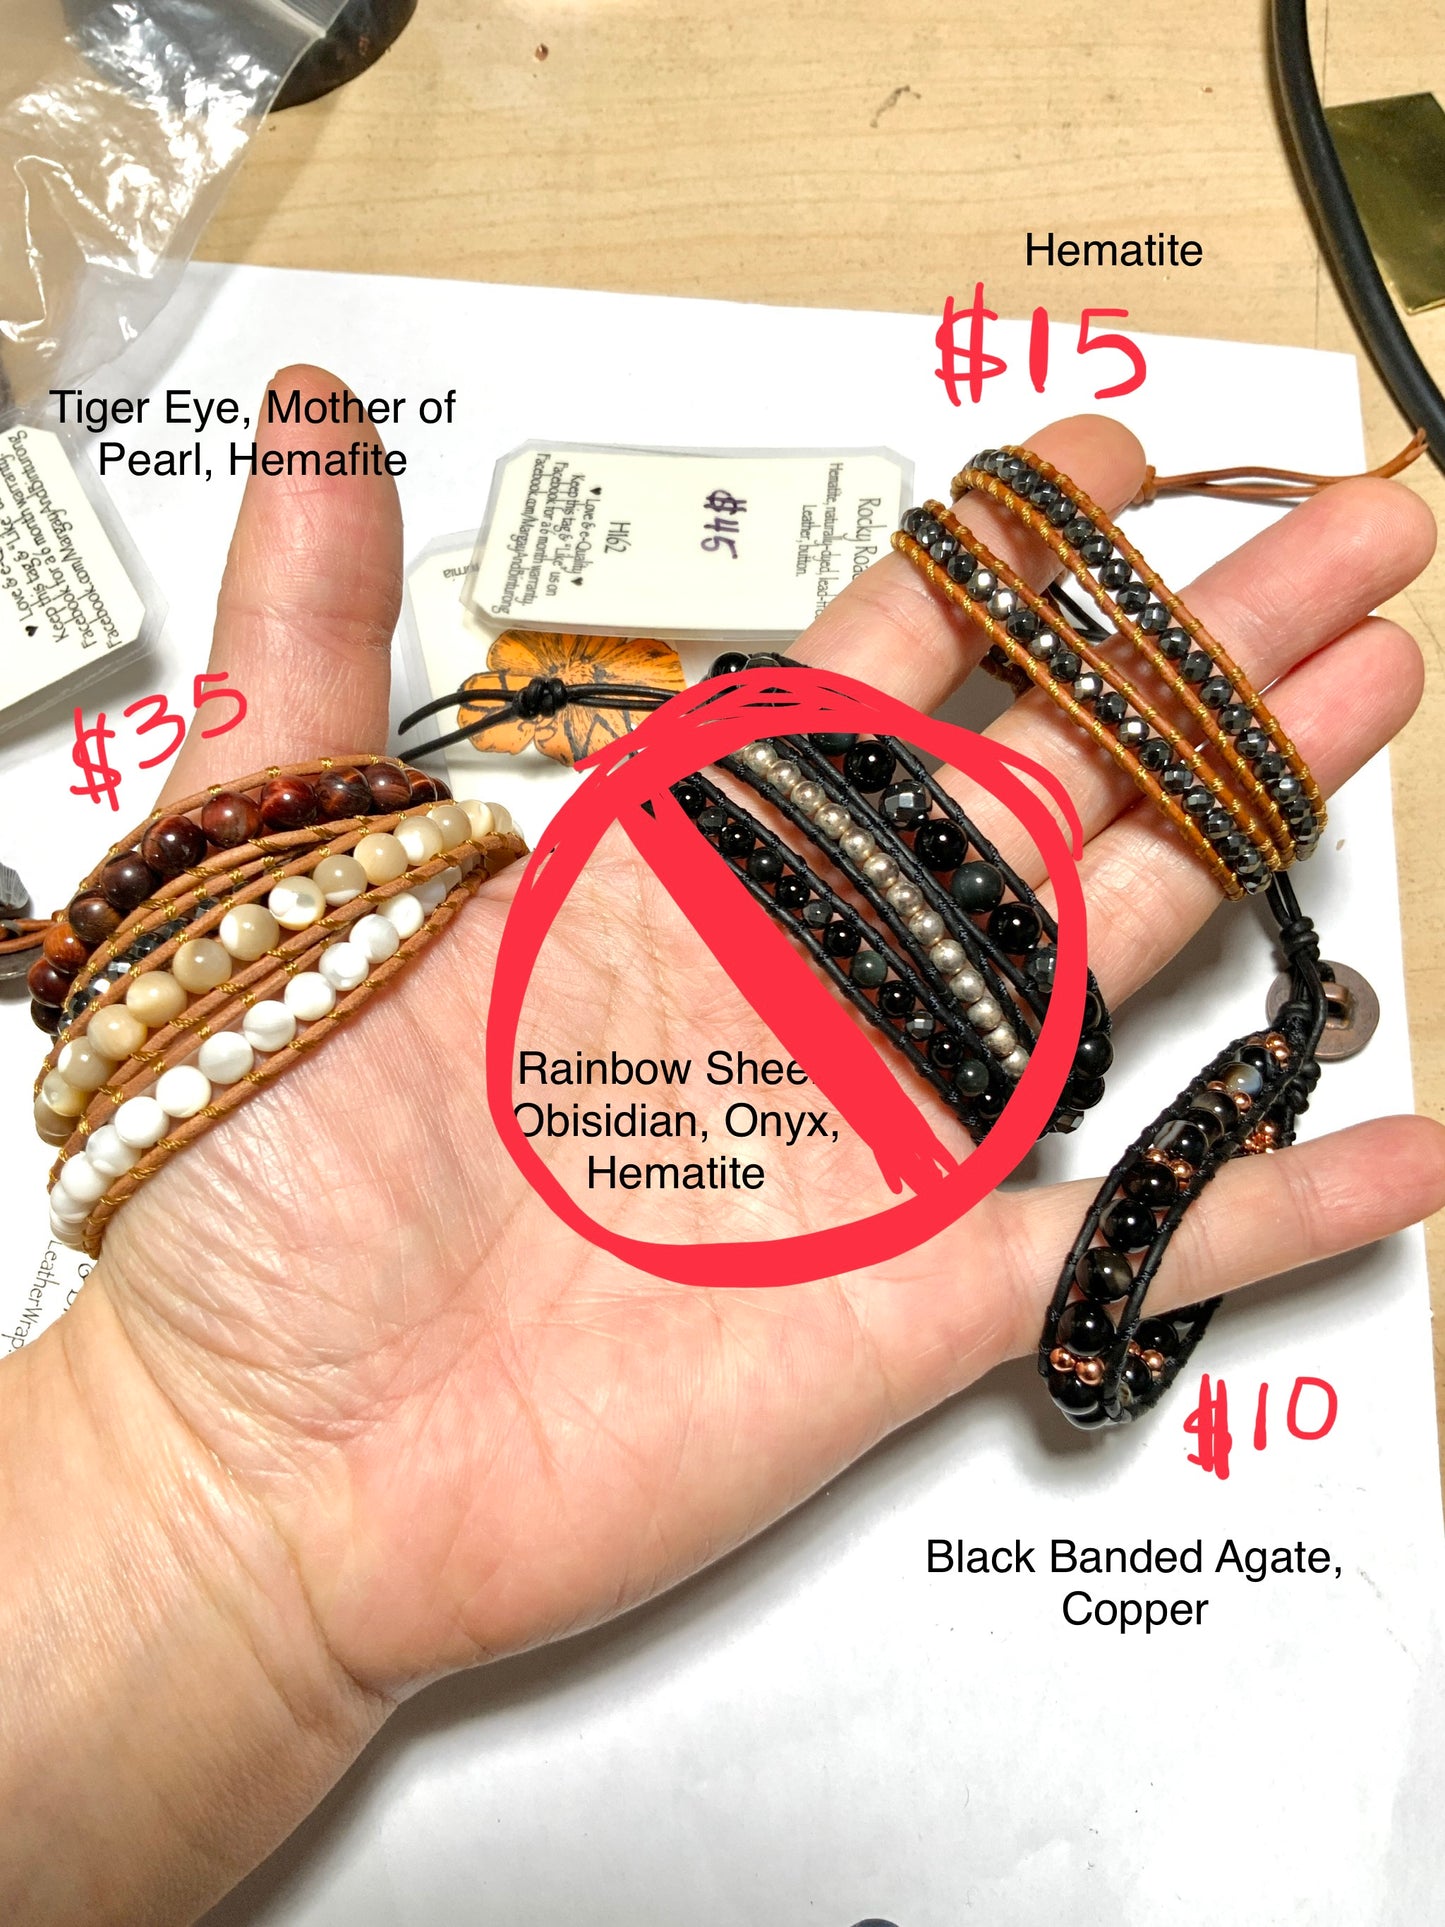 *Clearance* OG MargayB Gemstone Leatherwrap Bracelets, naturally dyed Leather made in USA